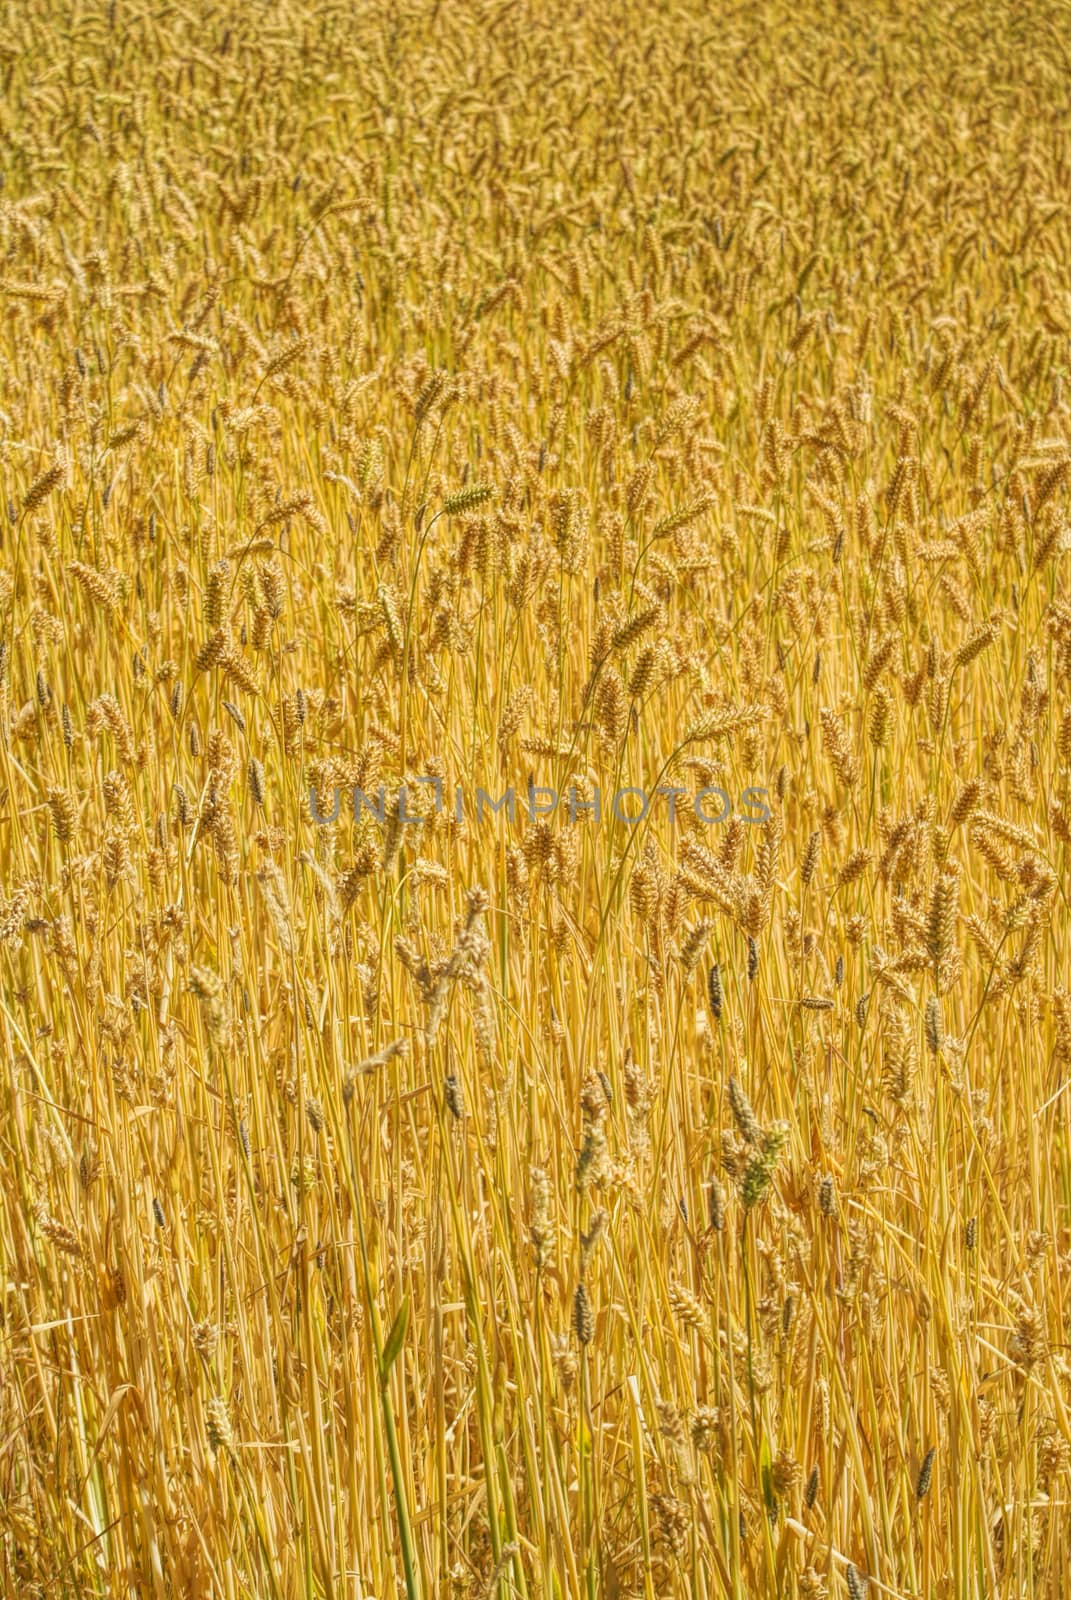 Golden wheat field, symbol of good harvest